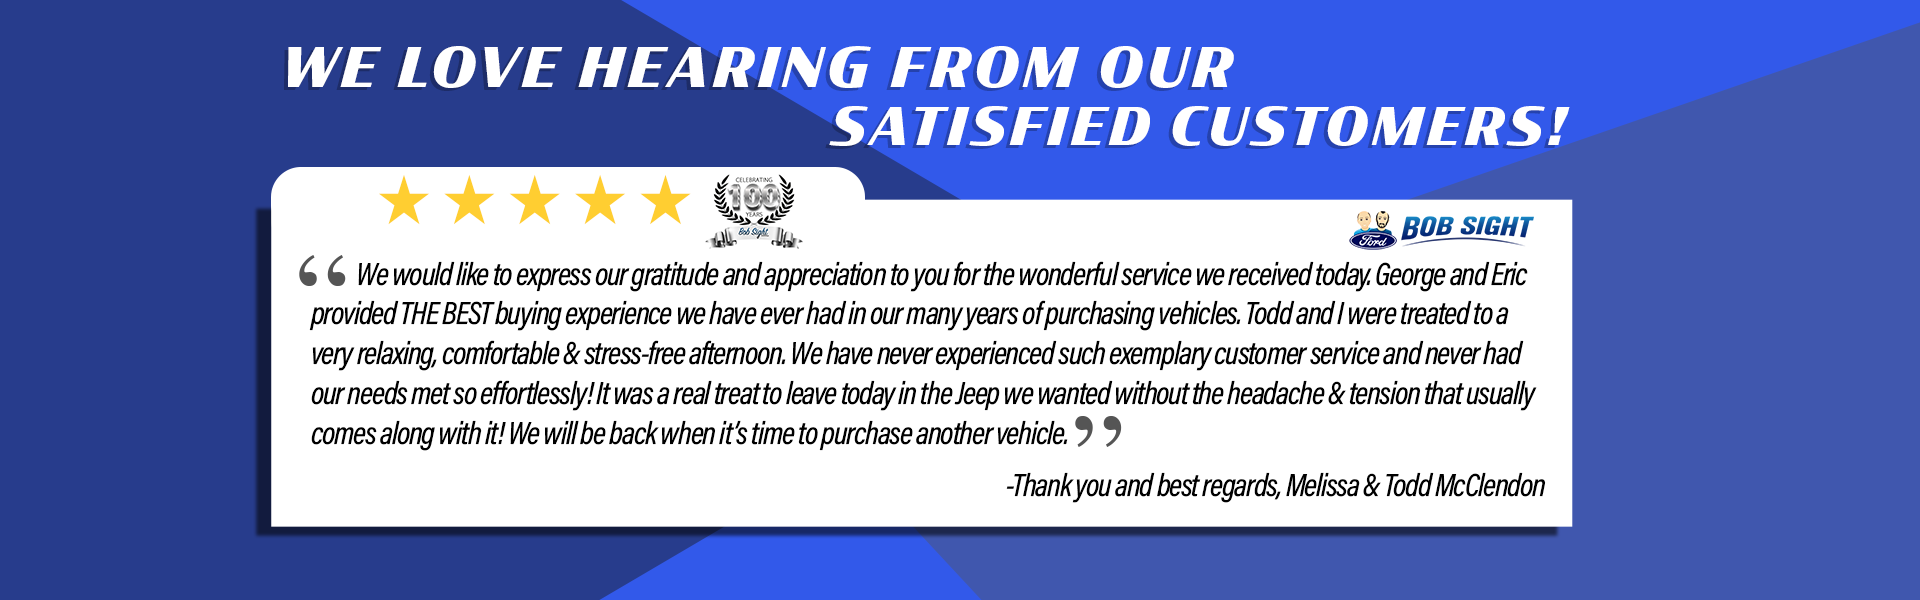 Happy Customer Review at Kansas City Ford Dealer